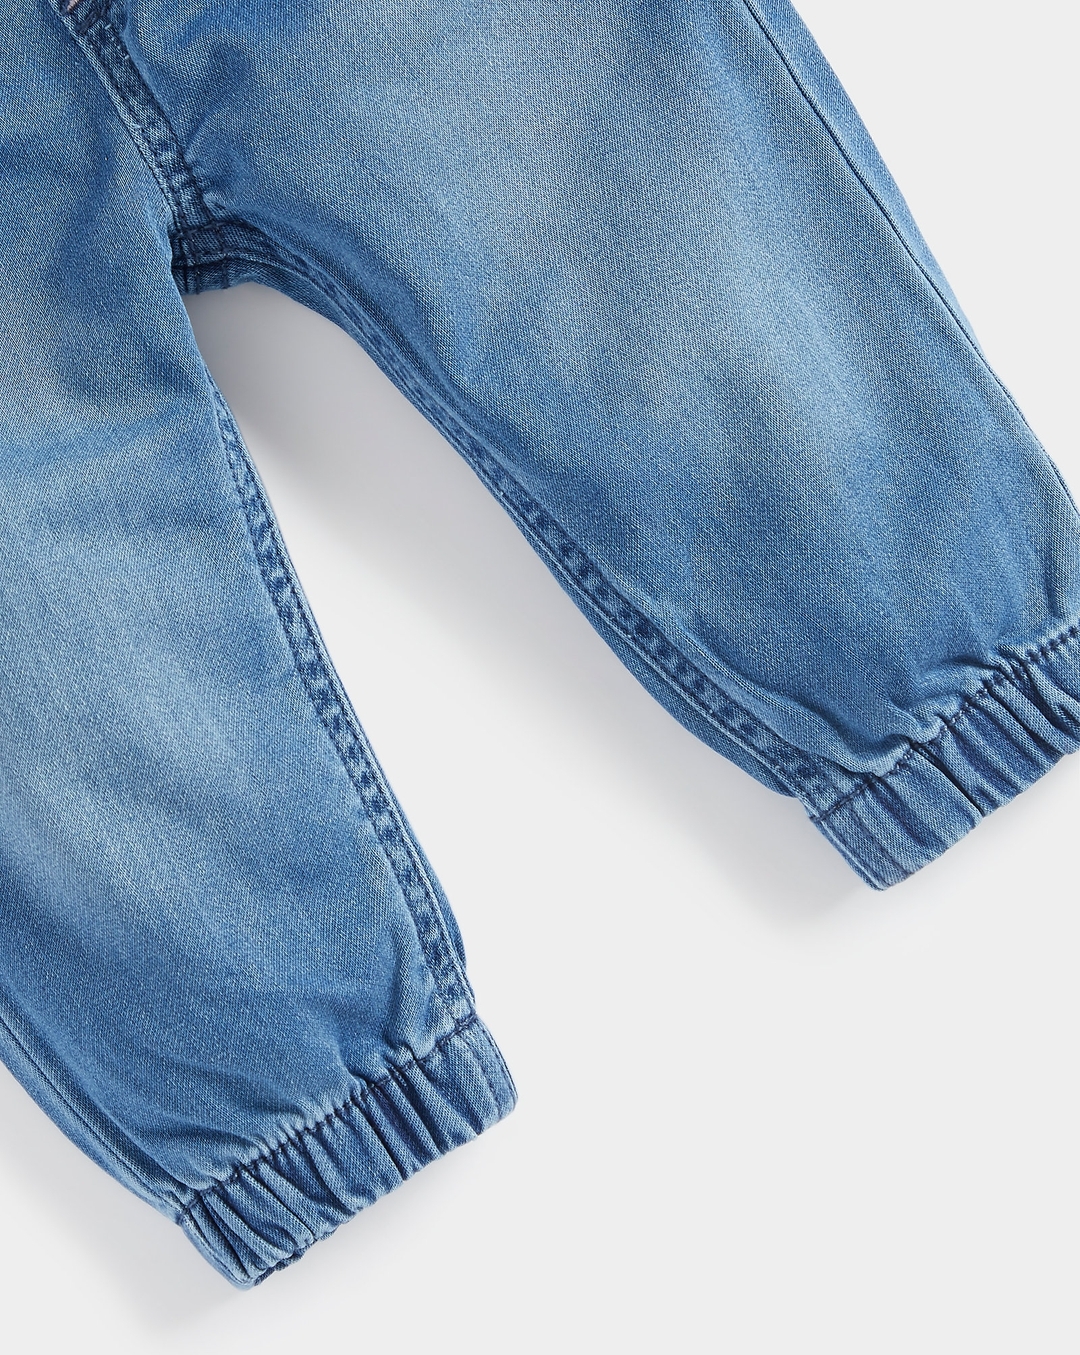 Buy Girls Jeans-Denim Online at Best Price